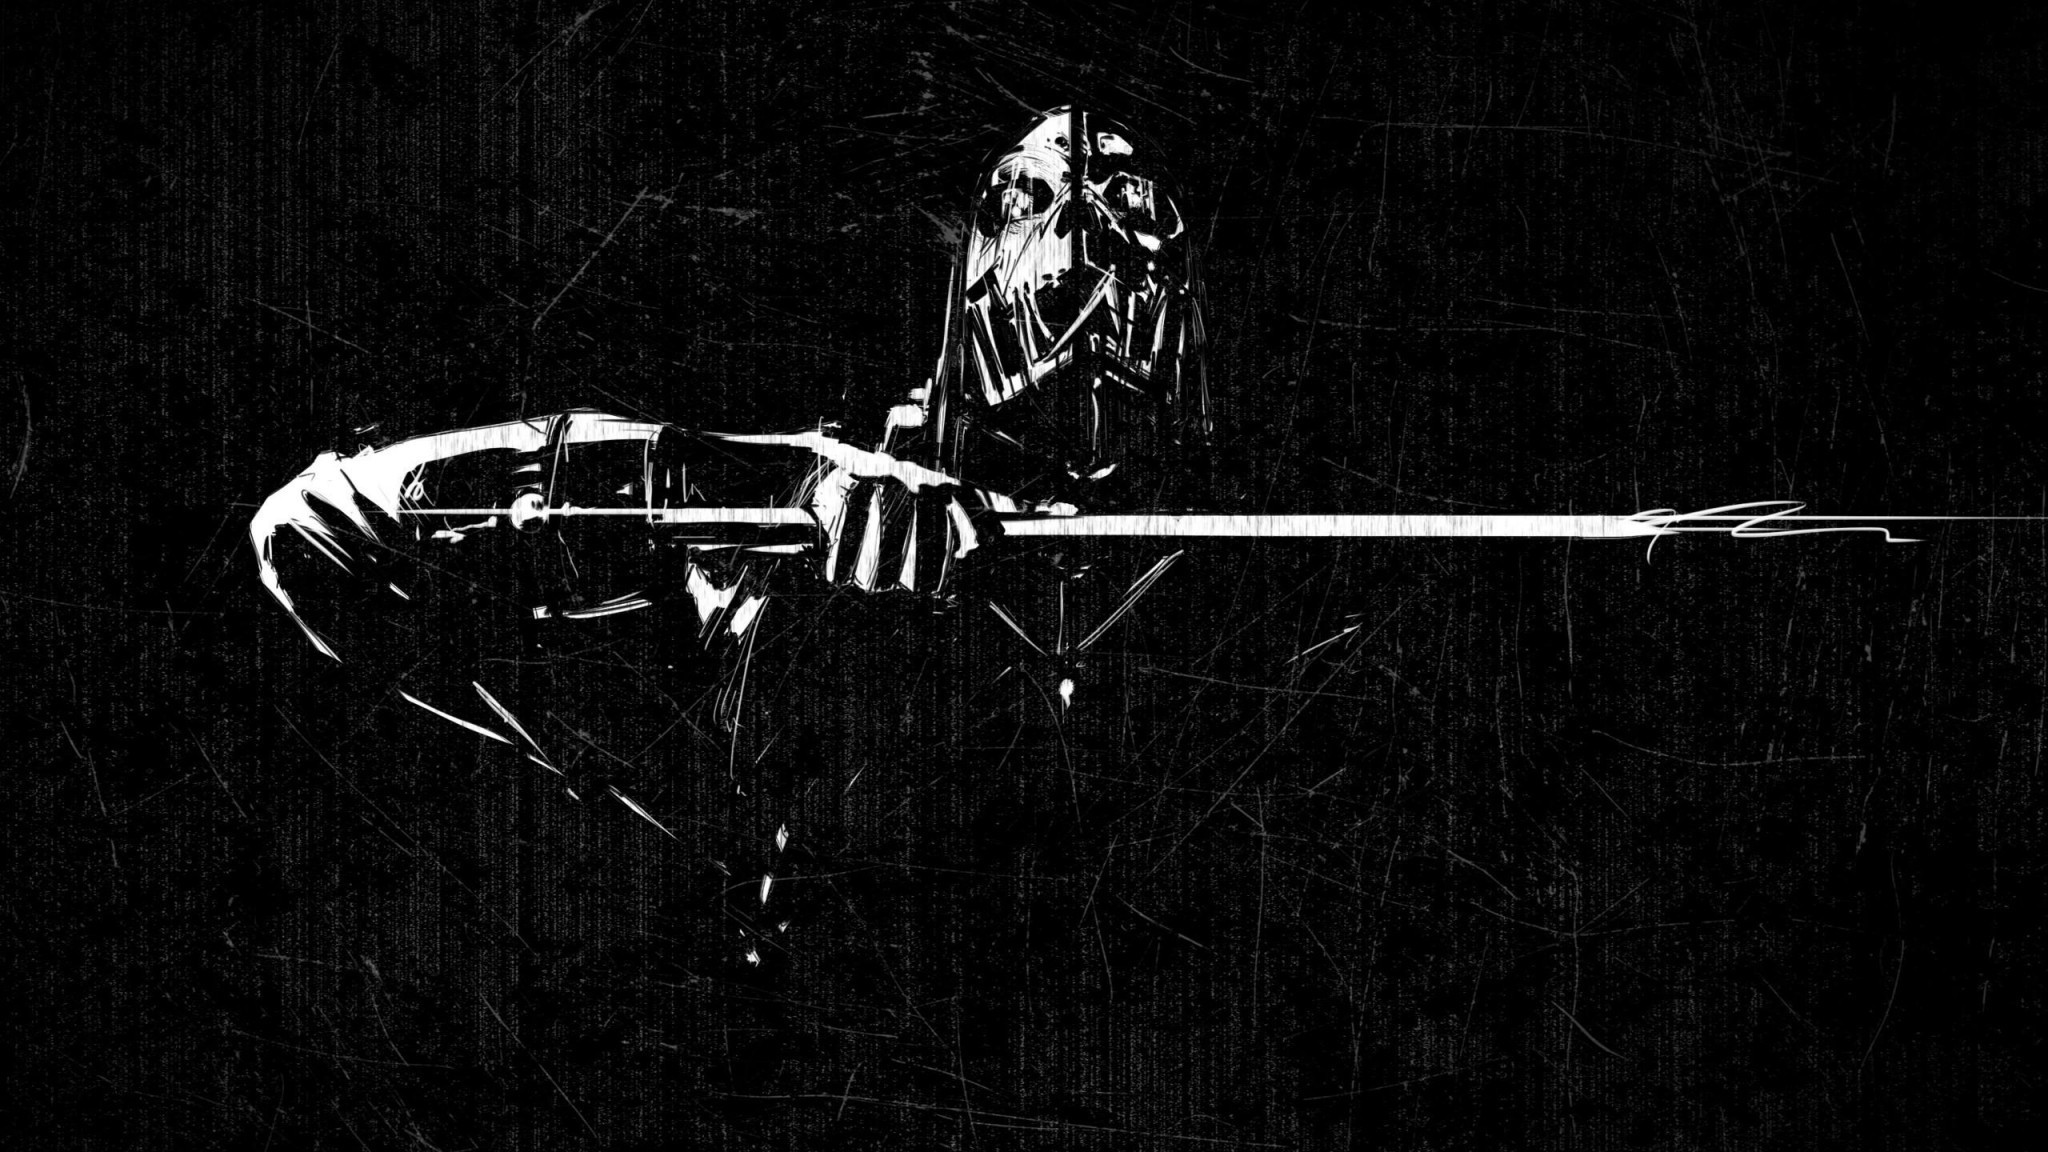 General 2048x1152 Corvo Attano Dishonored black video games PC gaming monochrome video game art dark background